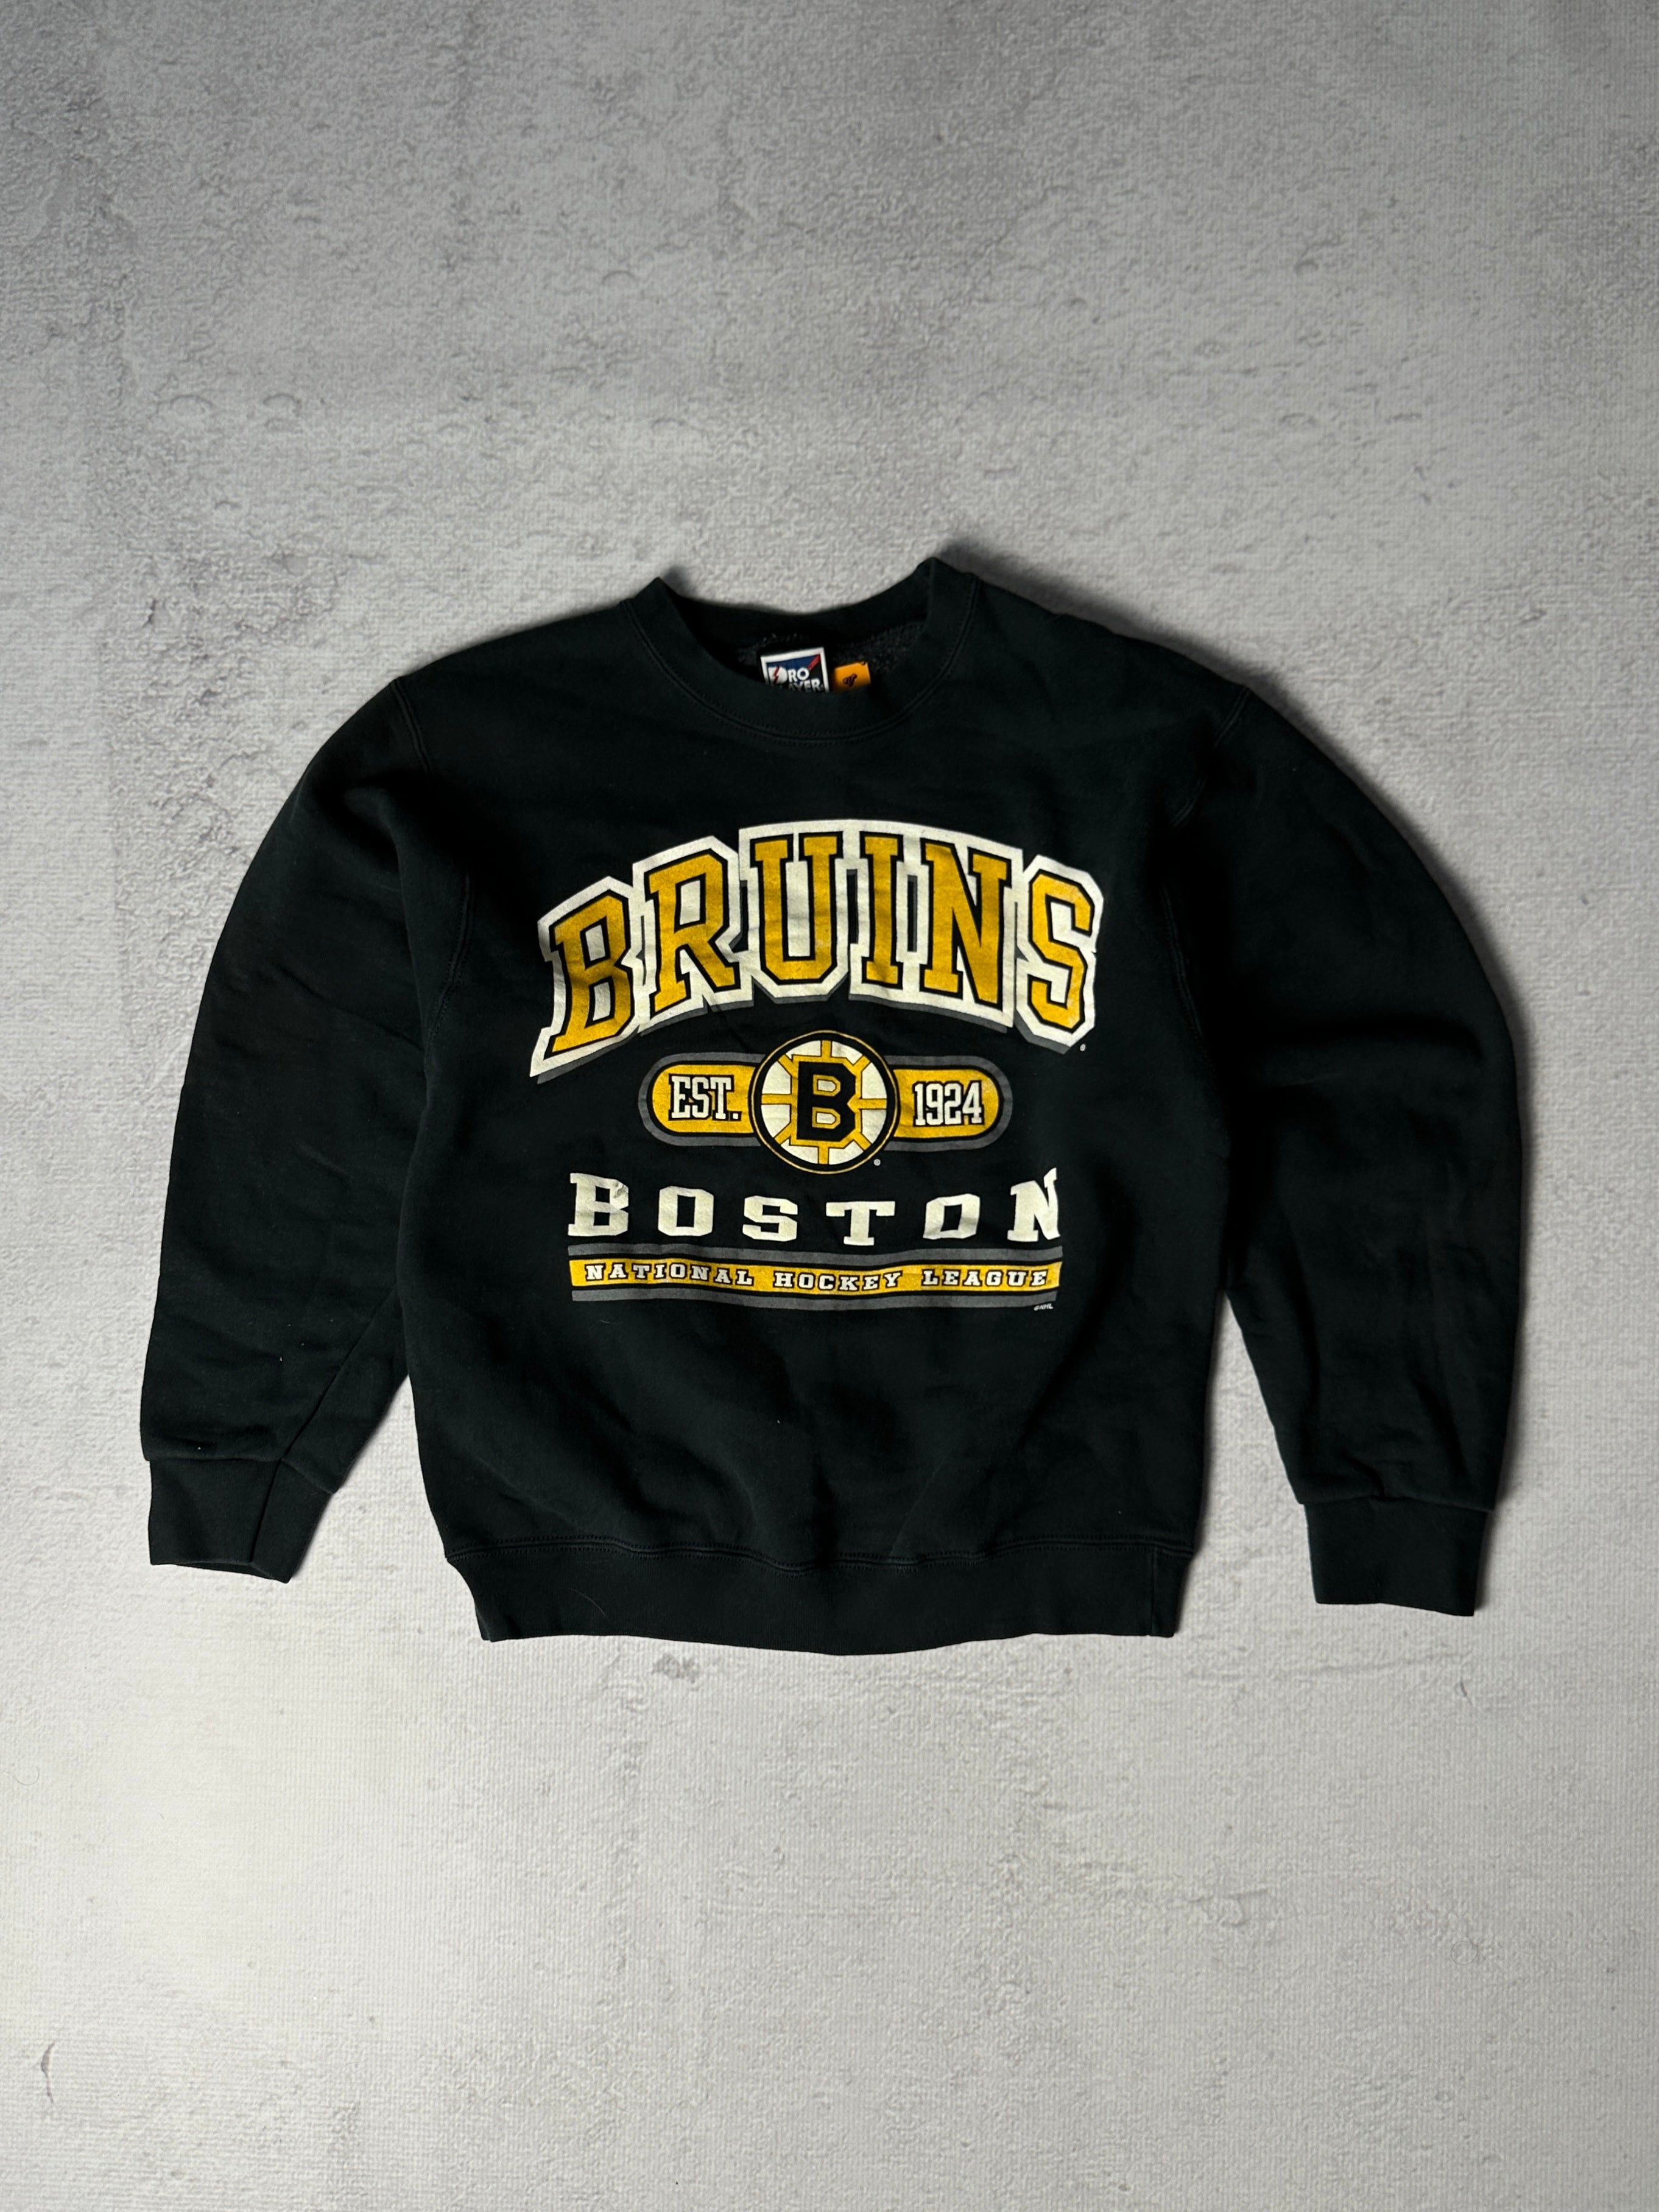 Vintage NHL Boston Bruins Crewneck Sweatshirt - Women's Medium